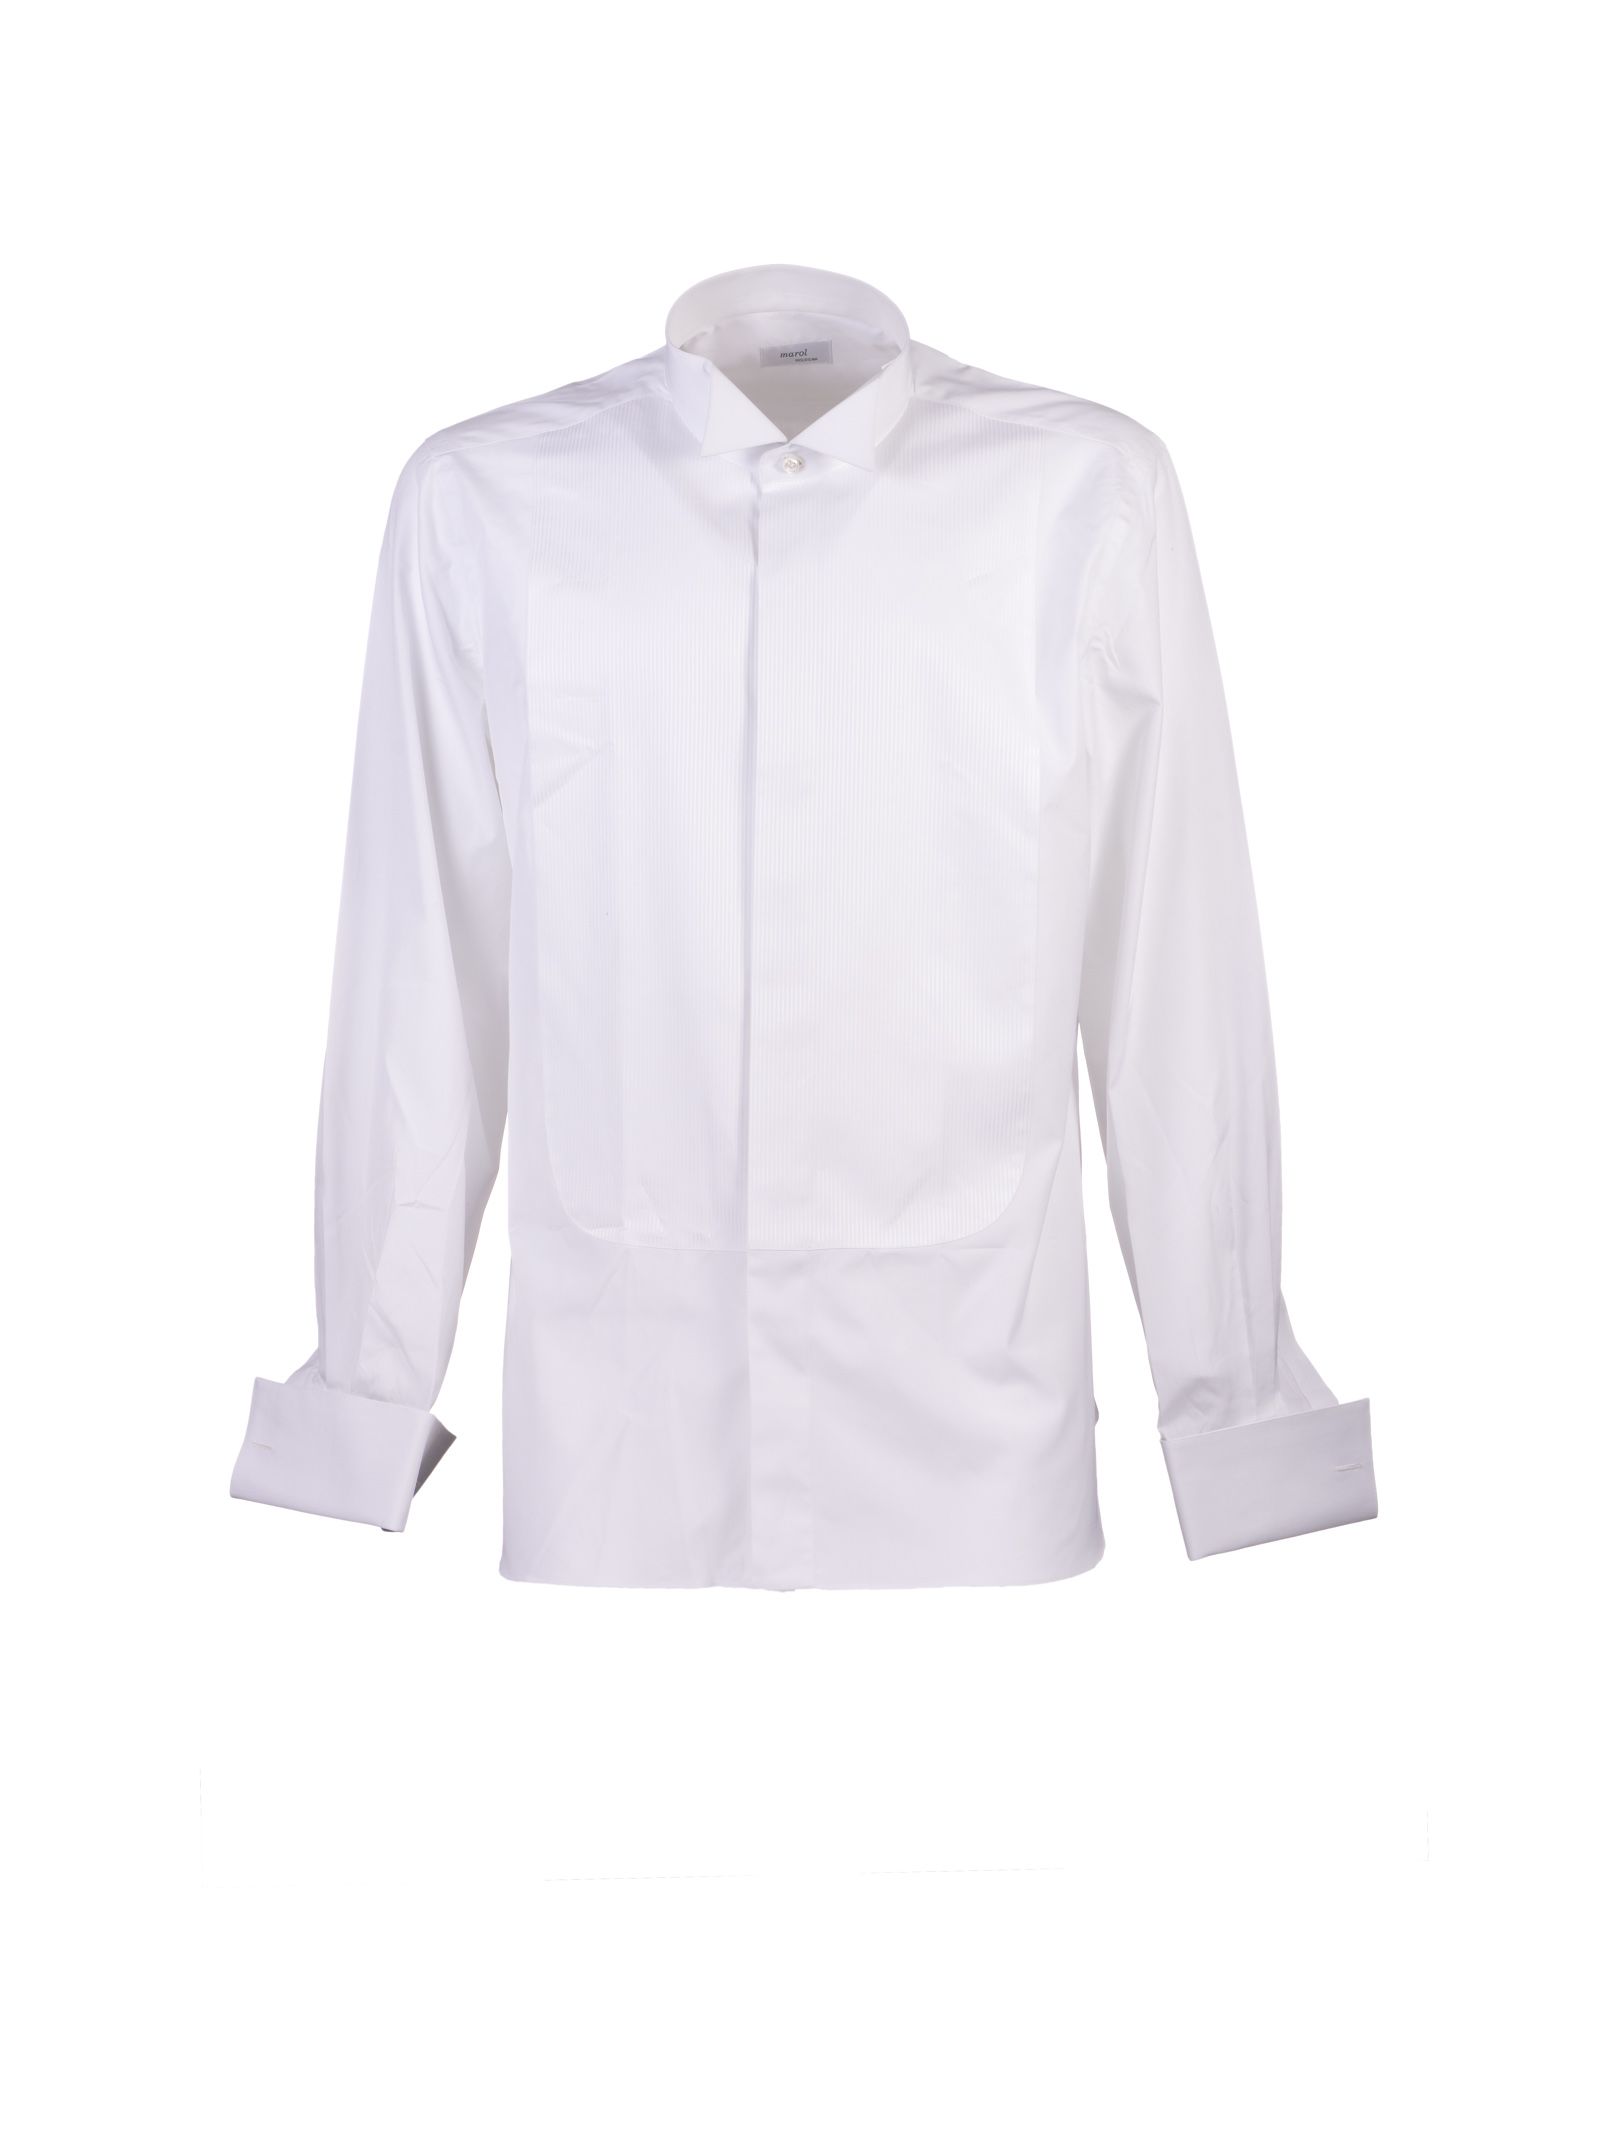 Marol - Marol Shirt - White, Men's Shirts | Italist